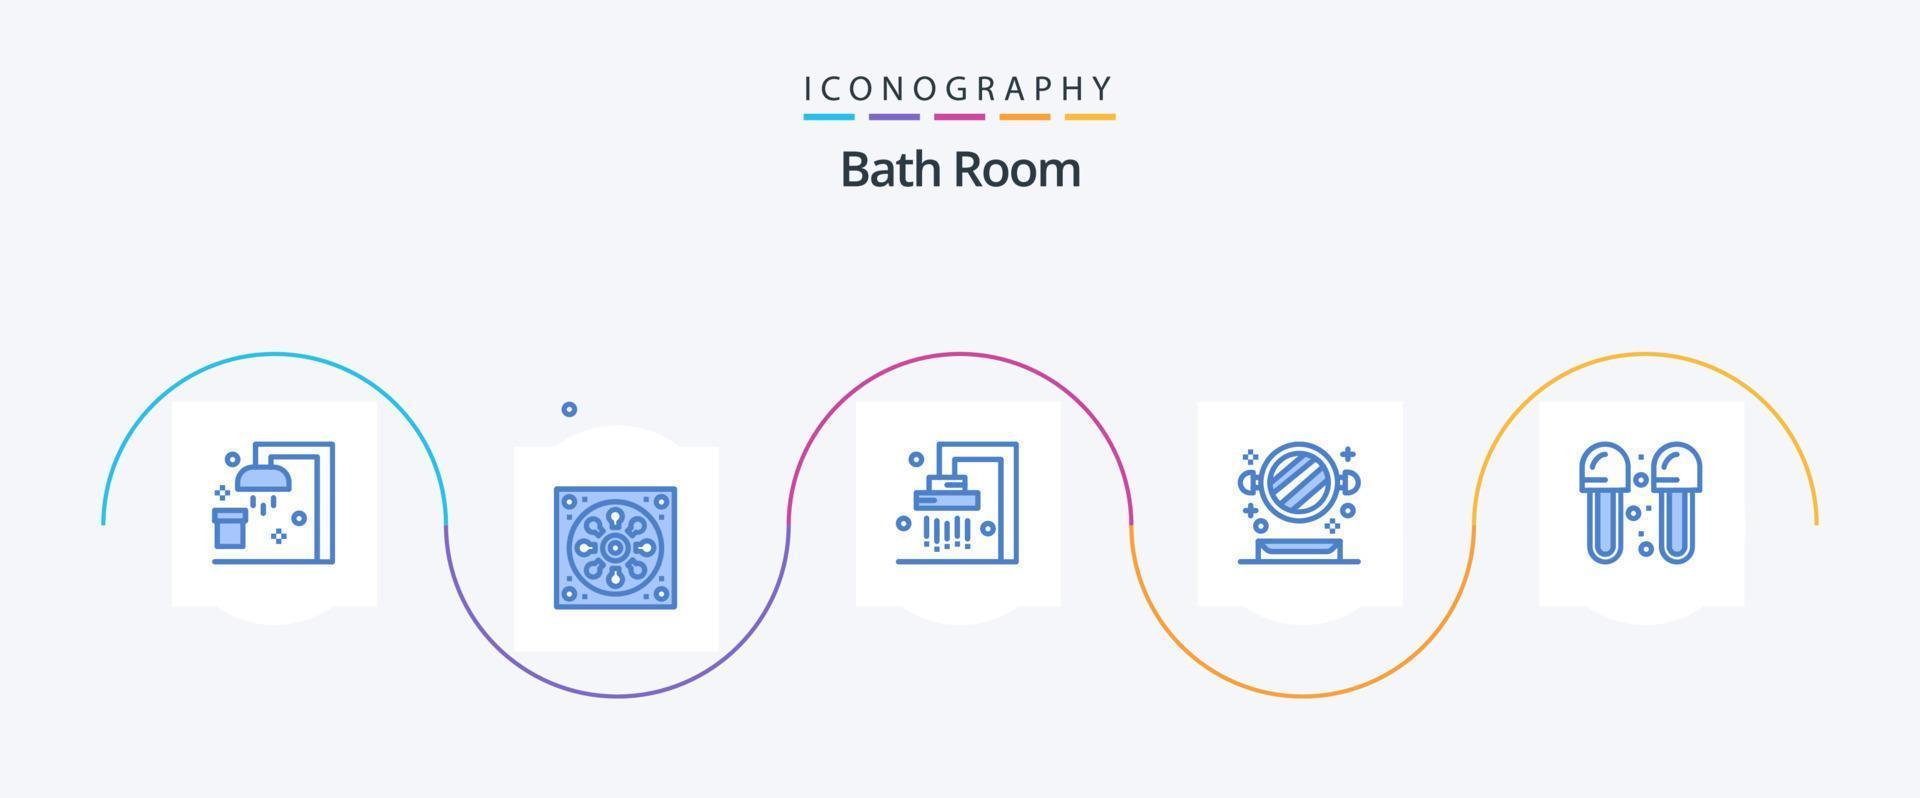 bañera habitación azul 5 5 icono paquete incluso baño. baño. baño. estante. baño vector